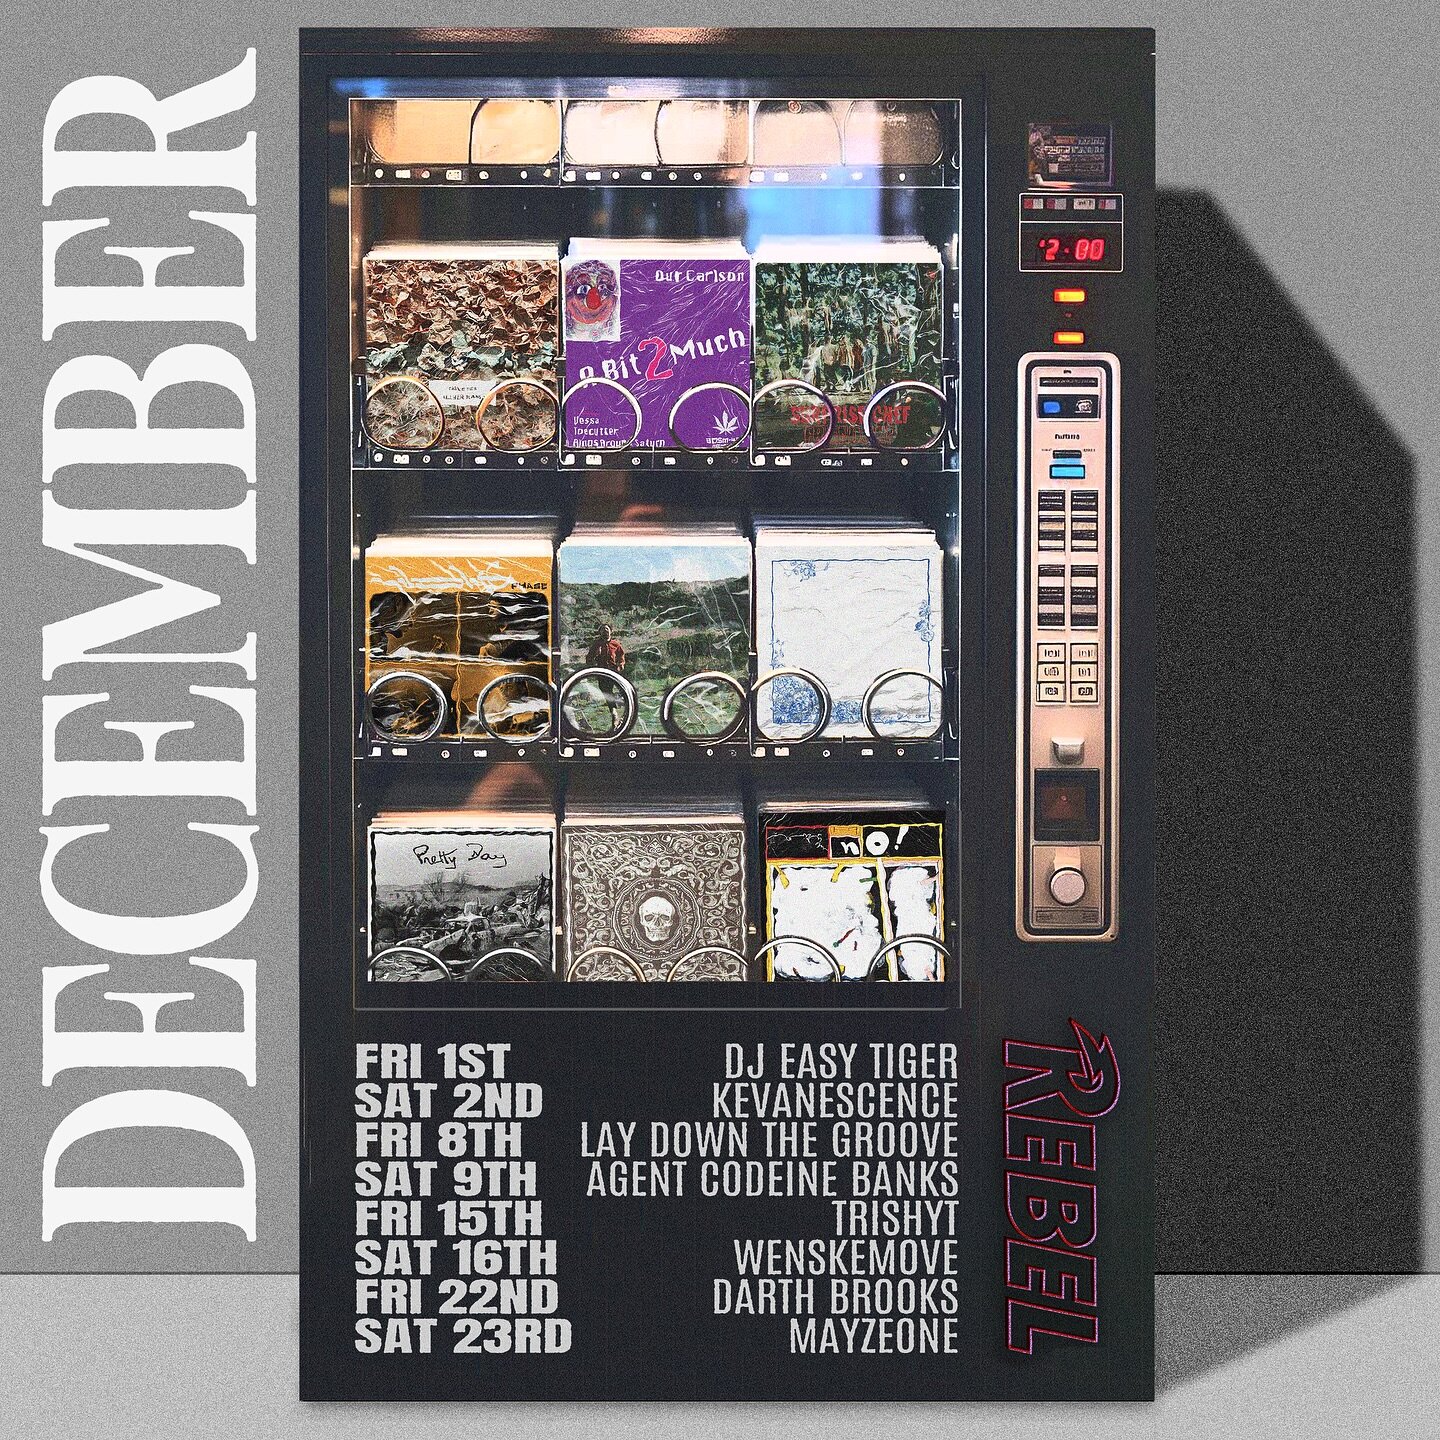 December&rsquo;s DJ line up, spinning Fridays and Saturdays 8-11pm 🔥 #vinyl #djsets #preston3072 #december #localmusic